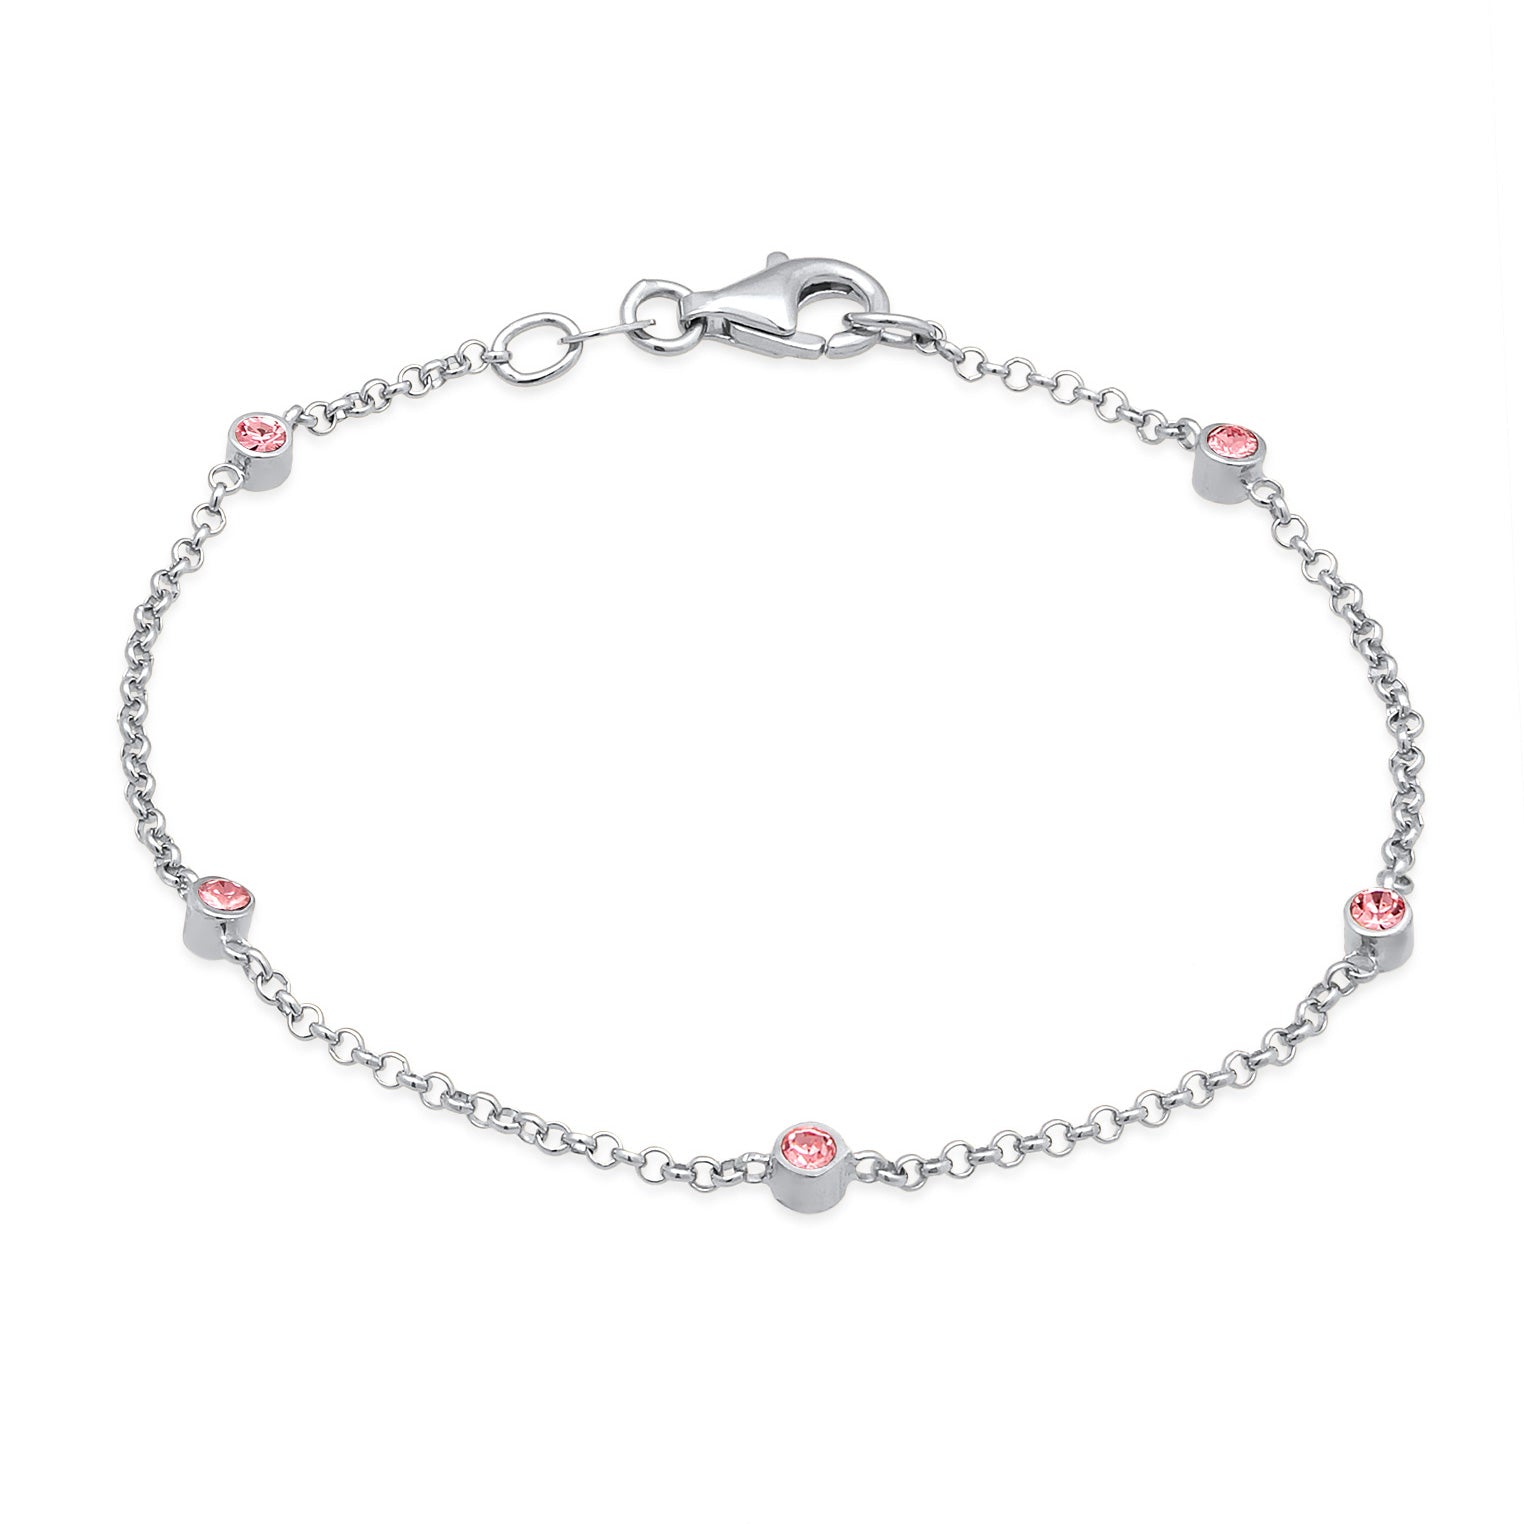 Ladies bracelets with precious stones | discover at Elli – Elli Jewelry | Silberarmbänder